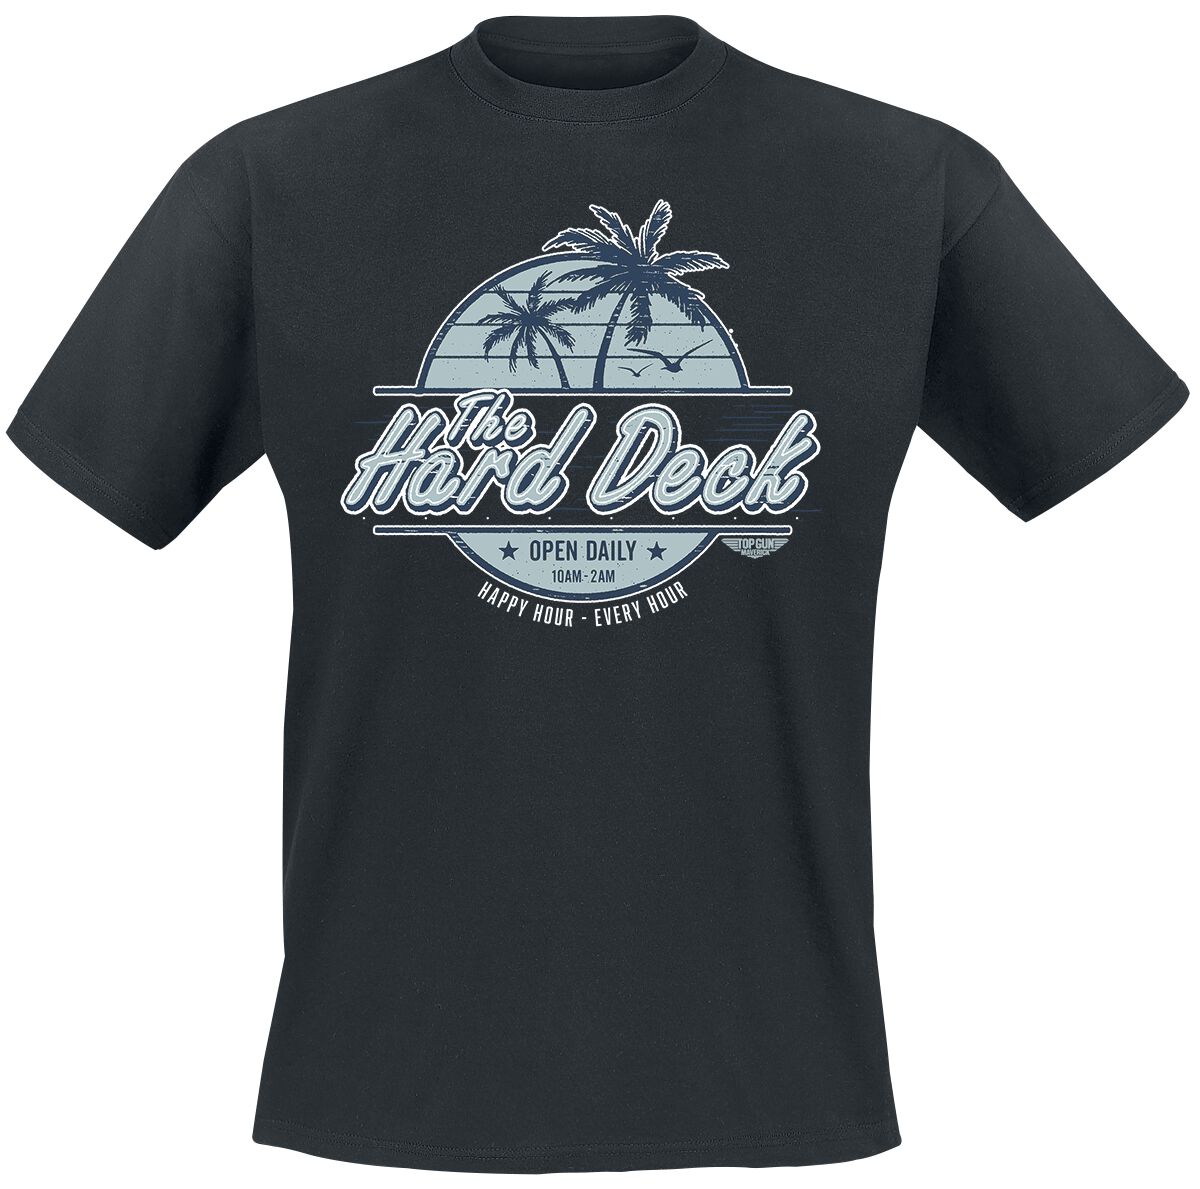 Top Gun The Hard Deck T-Shirt black